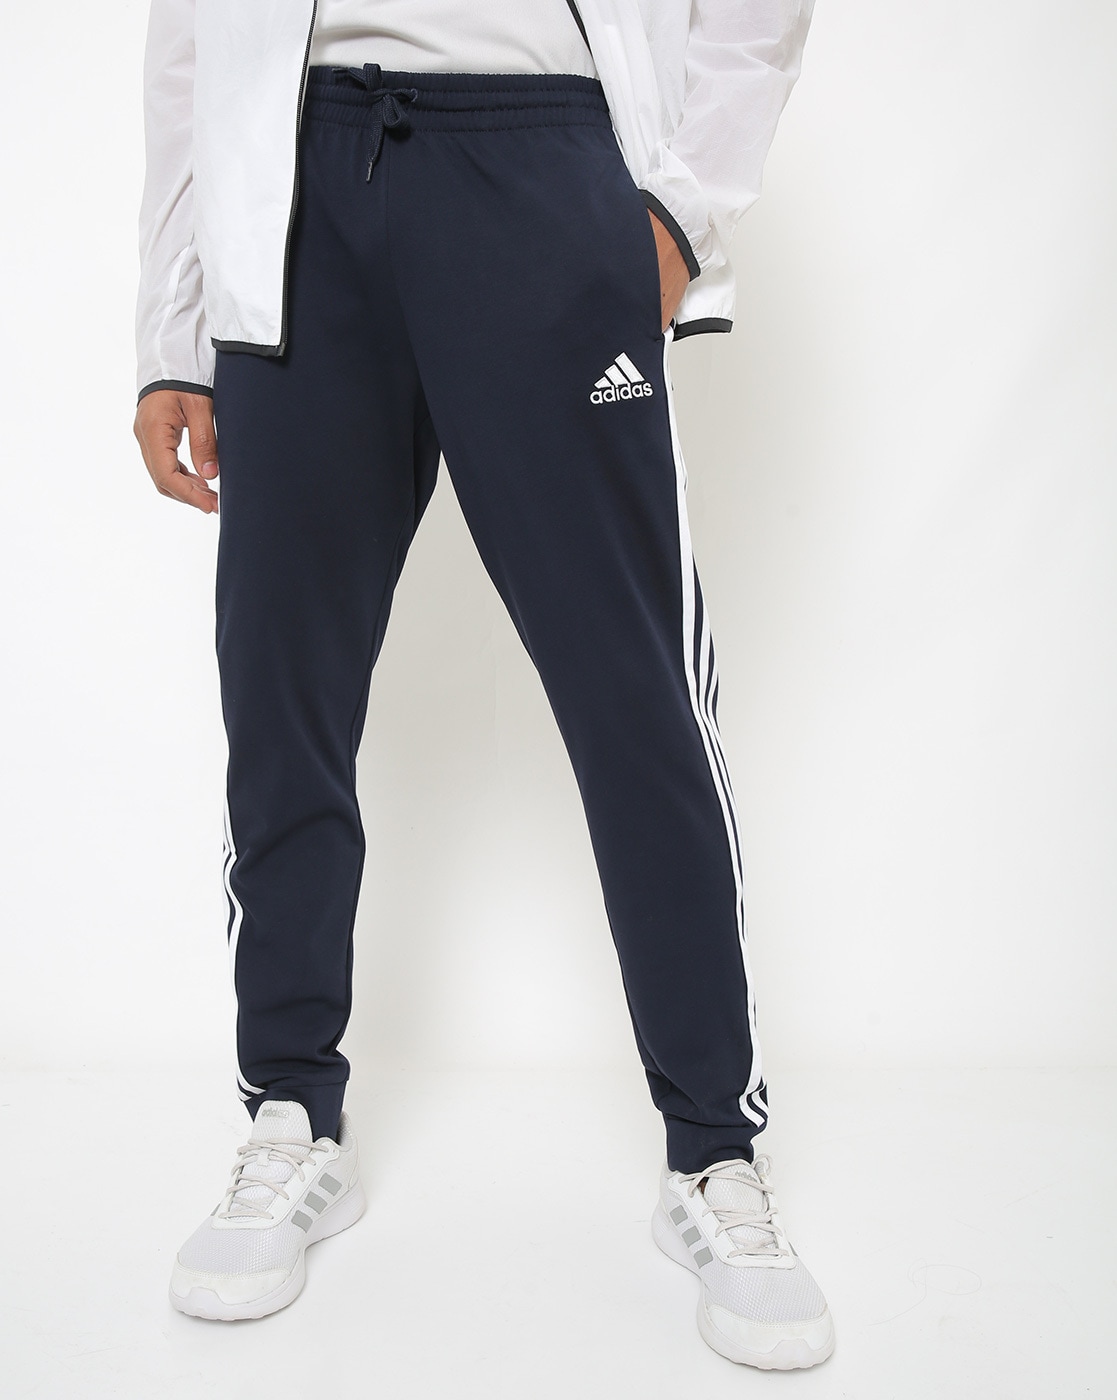 Buy Blue Track Pants for Men by Adidas Originals Online  Ajiocom